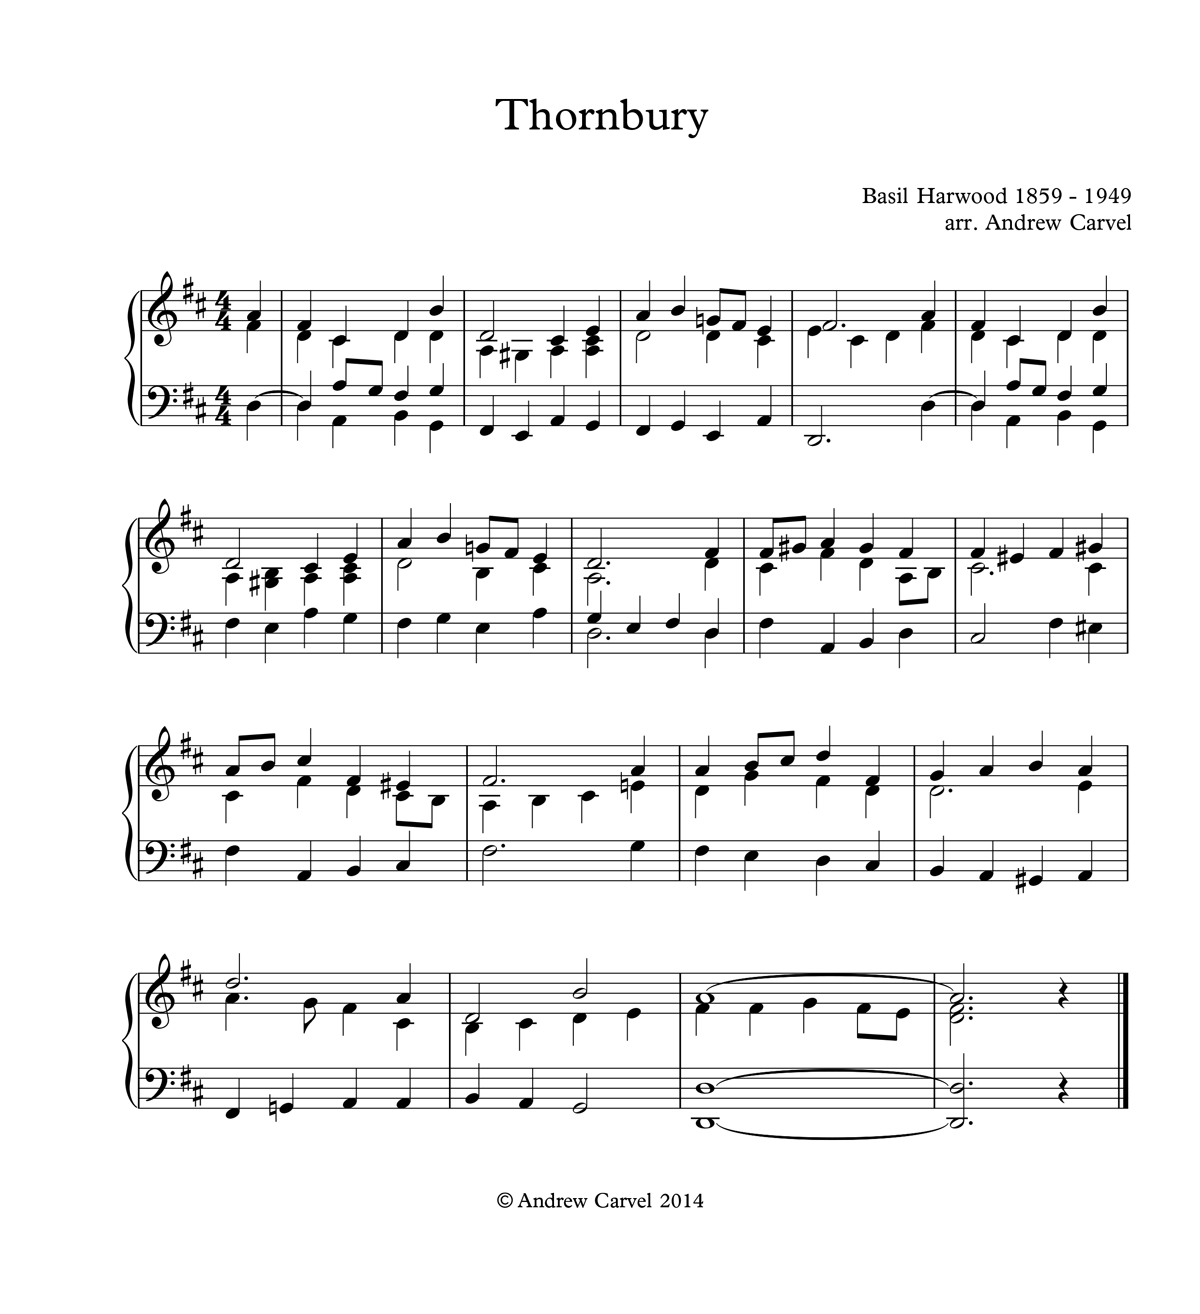 image of Thornbury full score